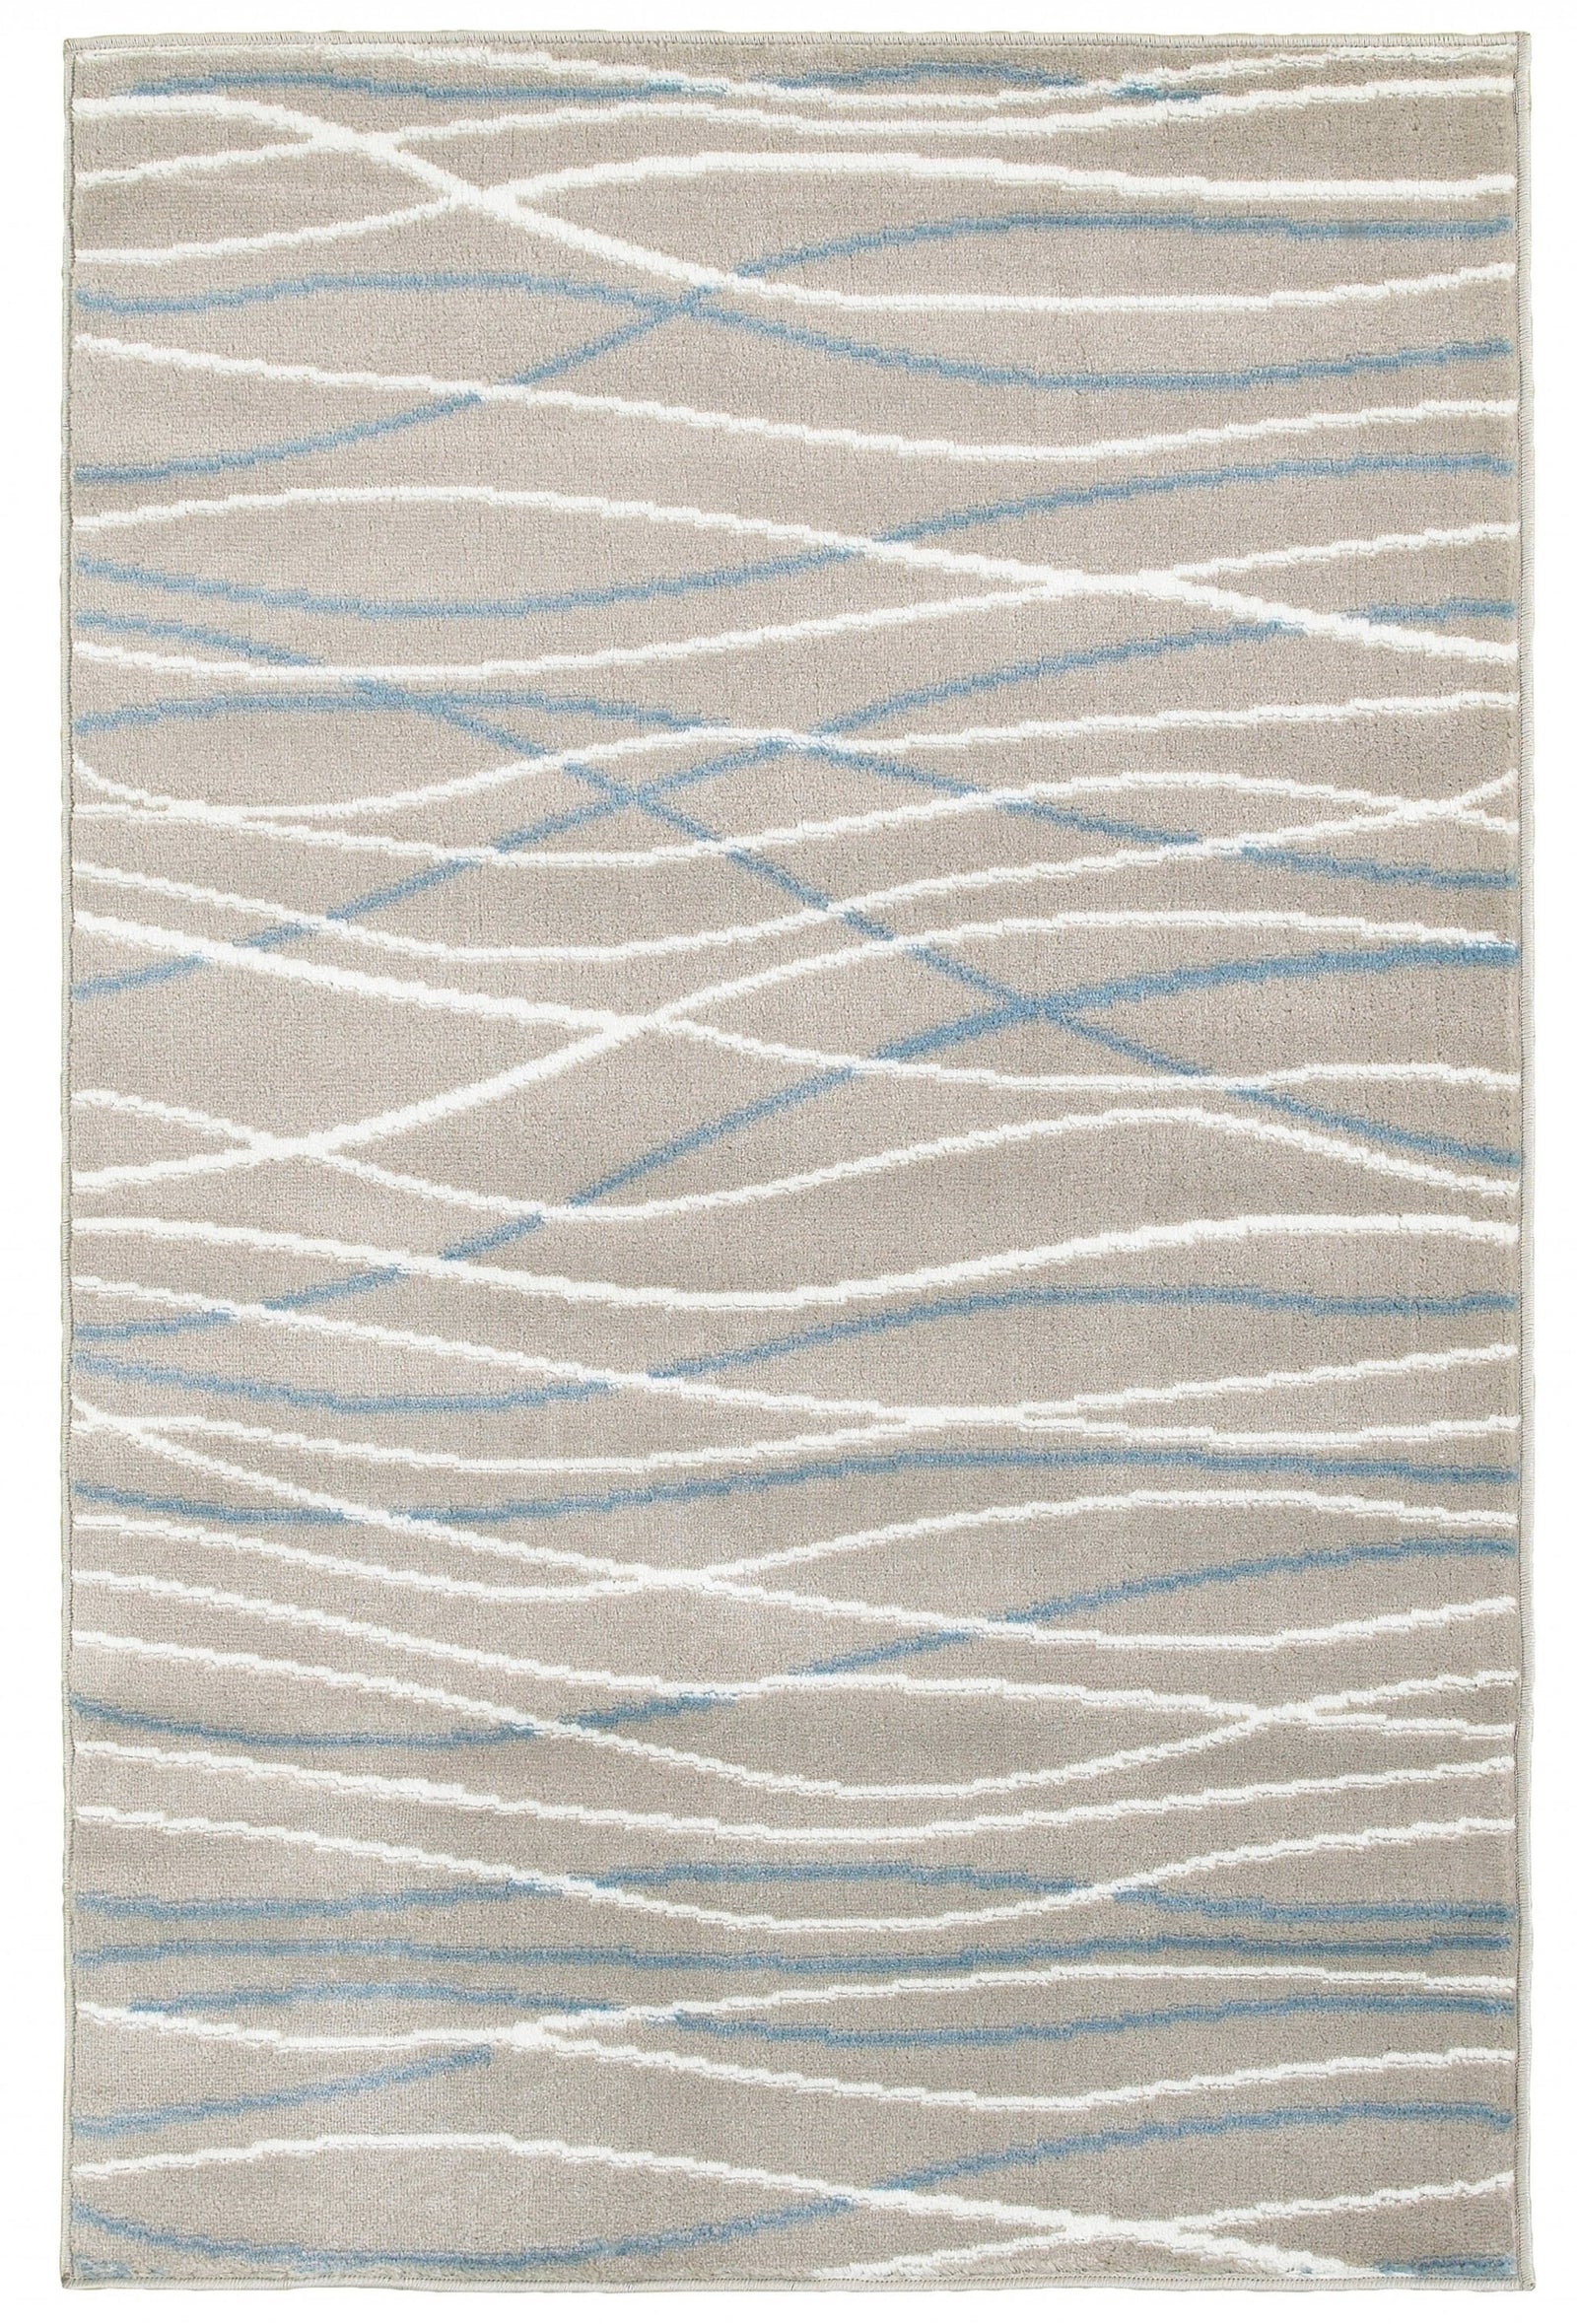 5’ x 7’ Gray Contemporary Waves Area Rug